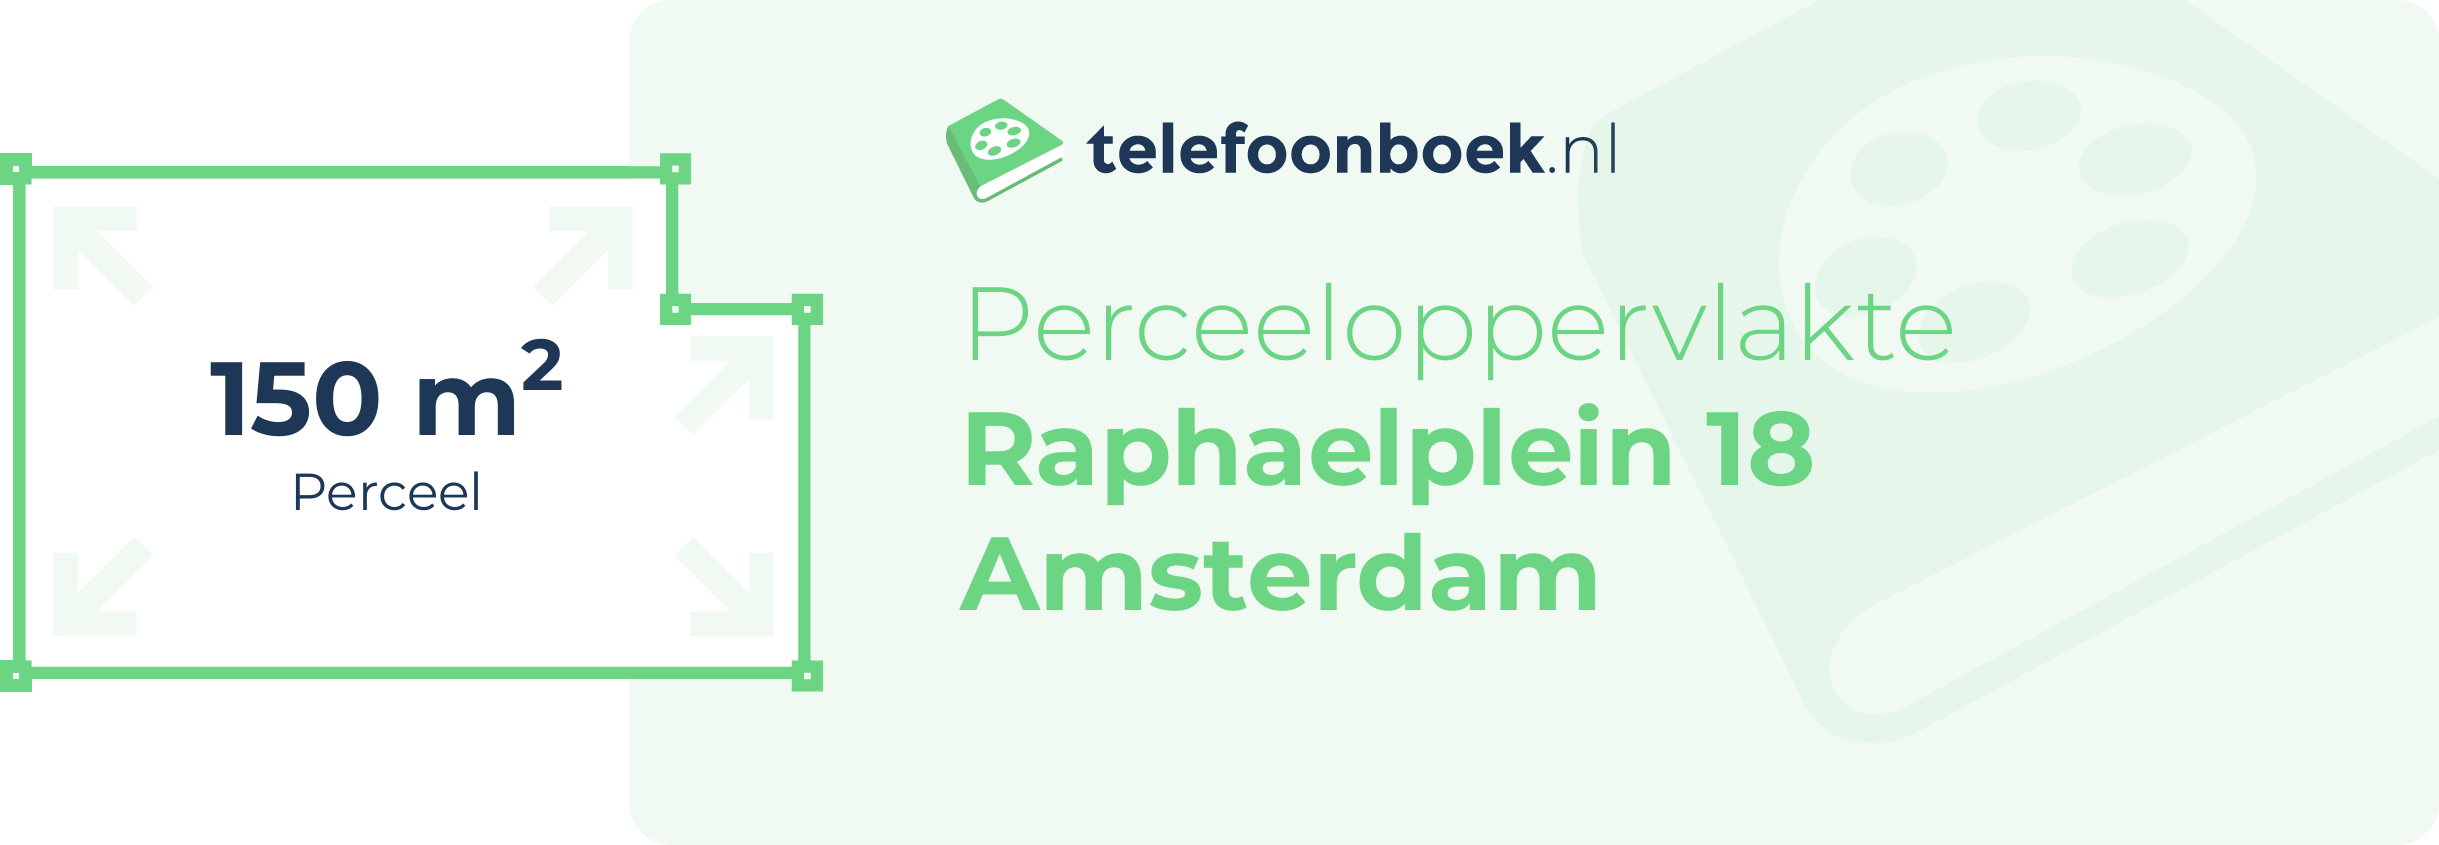 Perceeloppervlakte Raphaelplein 18 Amsterdam